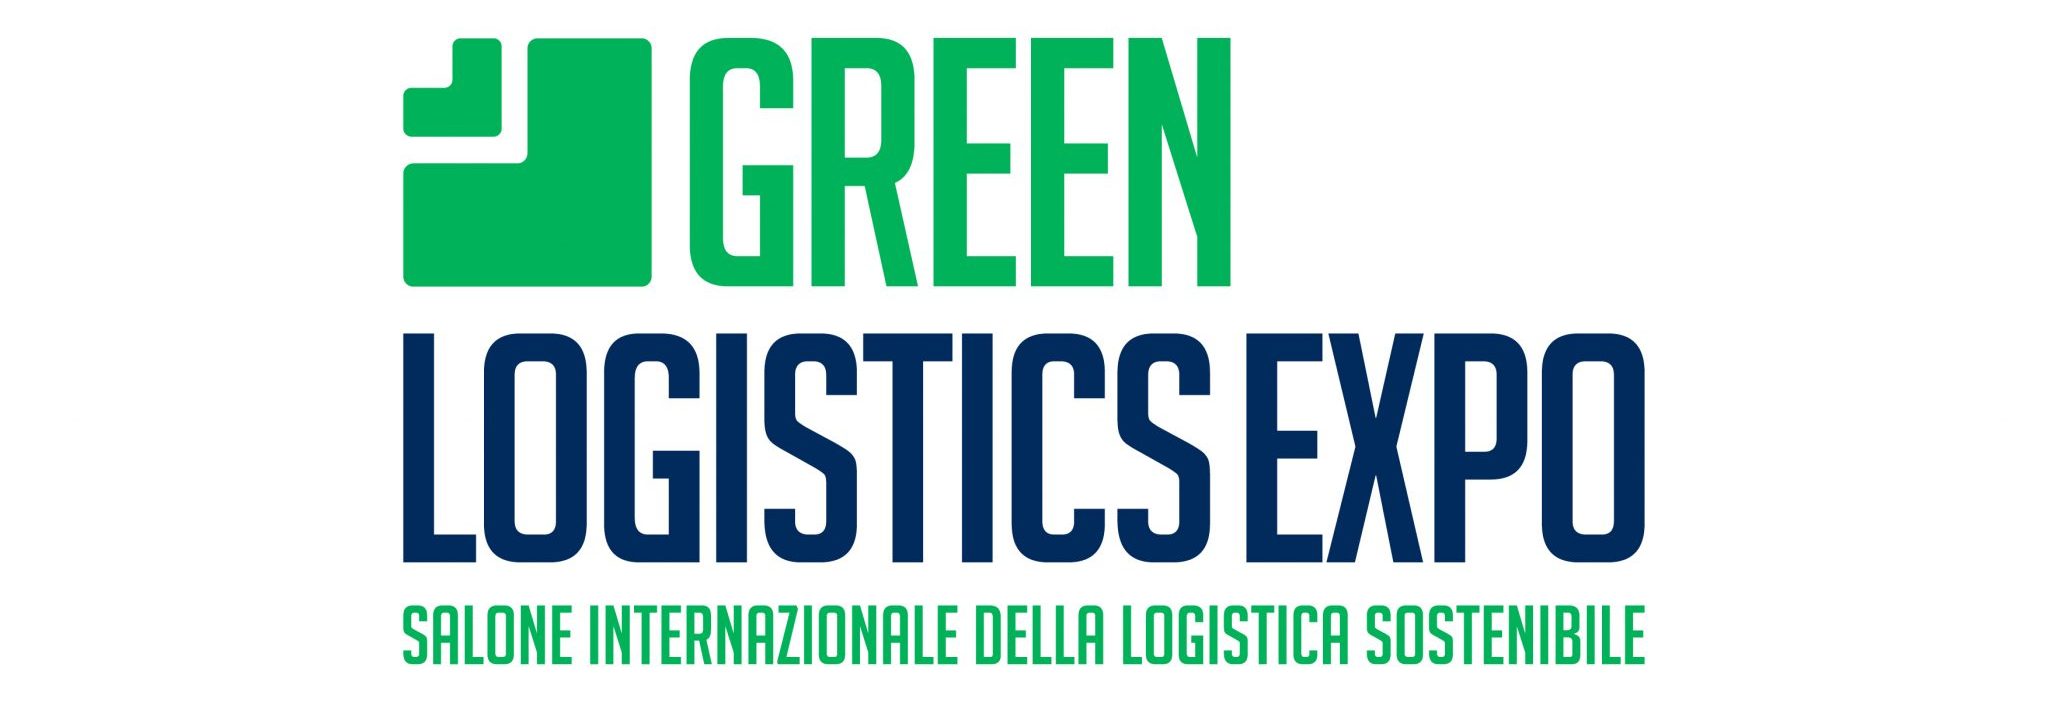 Green Logistics Intermodal Forum